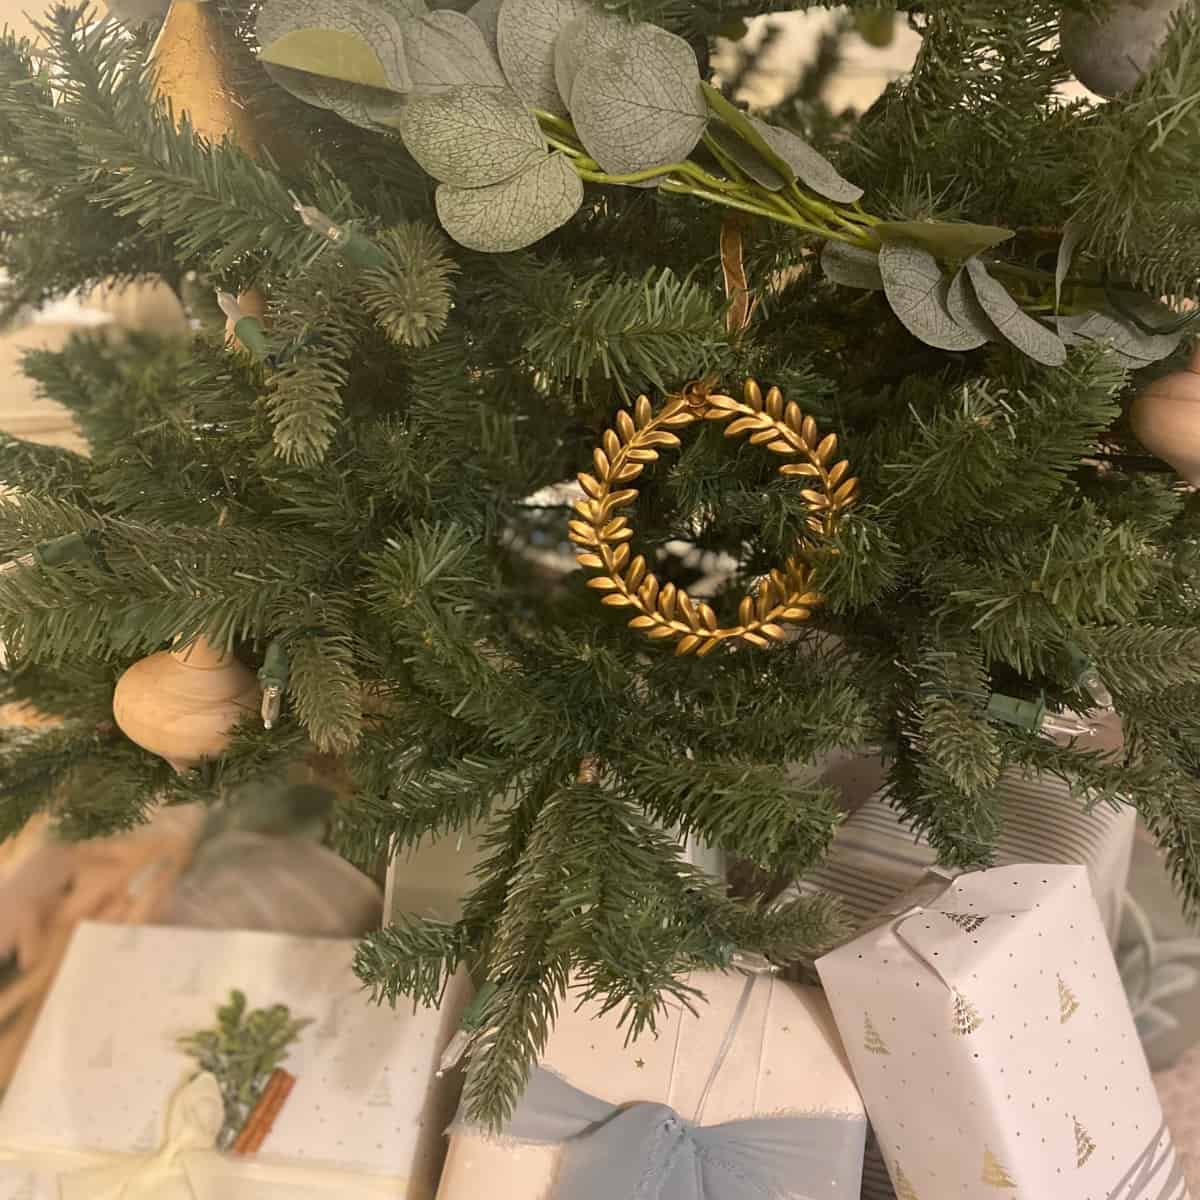 Brass laurel wreath Christmas ornament hangs above neutral presents